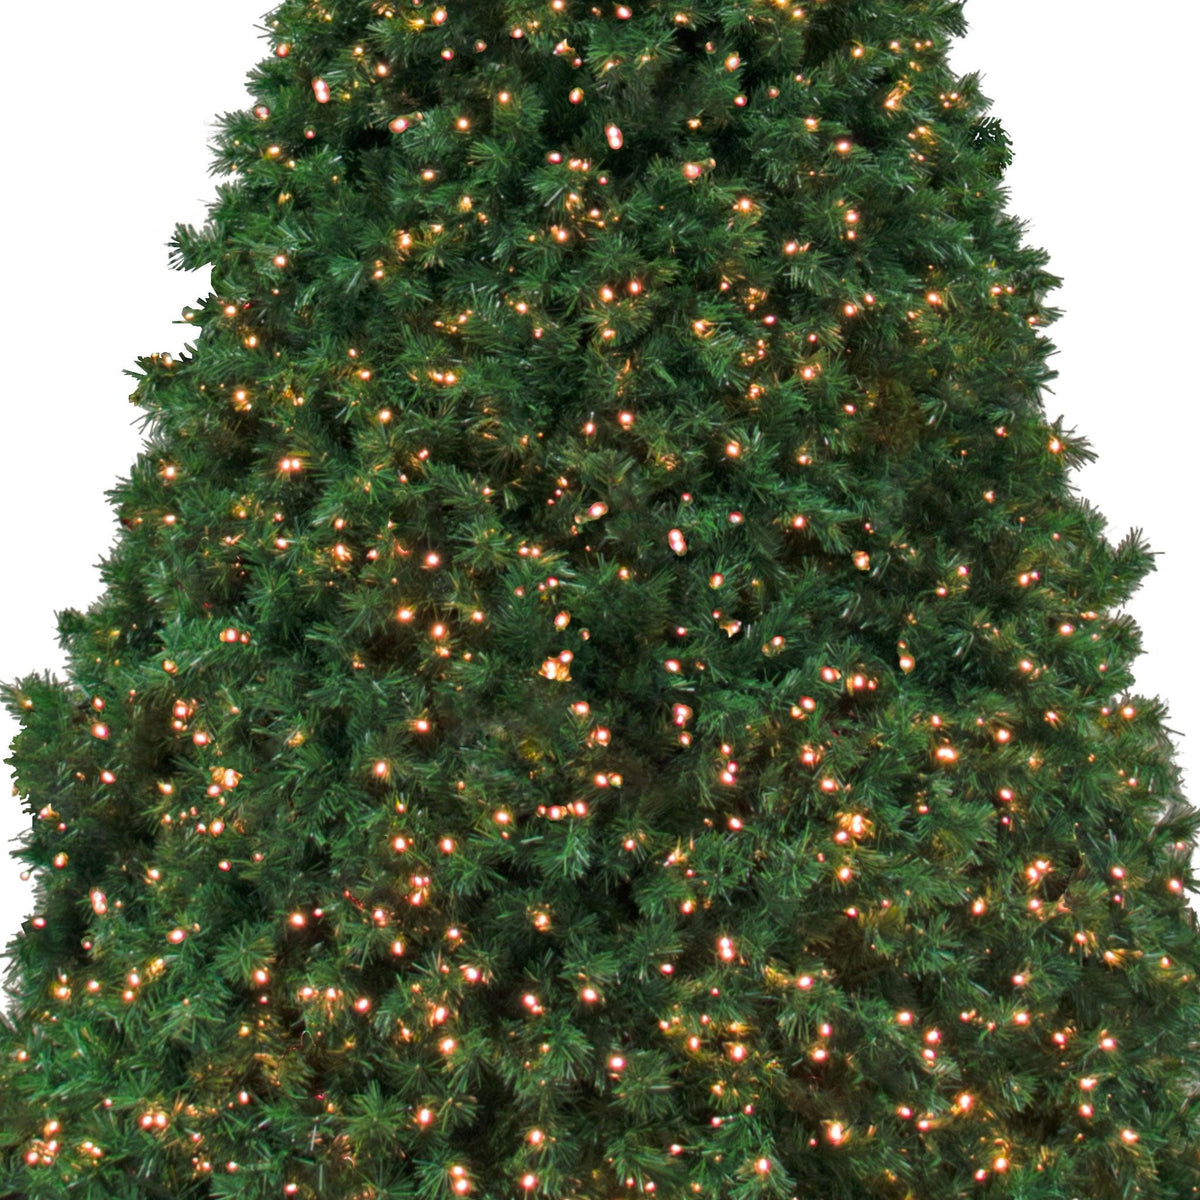 Lee Display's Original 10FT Premier Pine Christmas Trees Pre-Lit with LED Warm White Steady Lights on sale at leedisplay.com